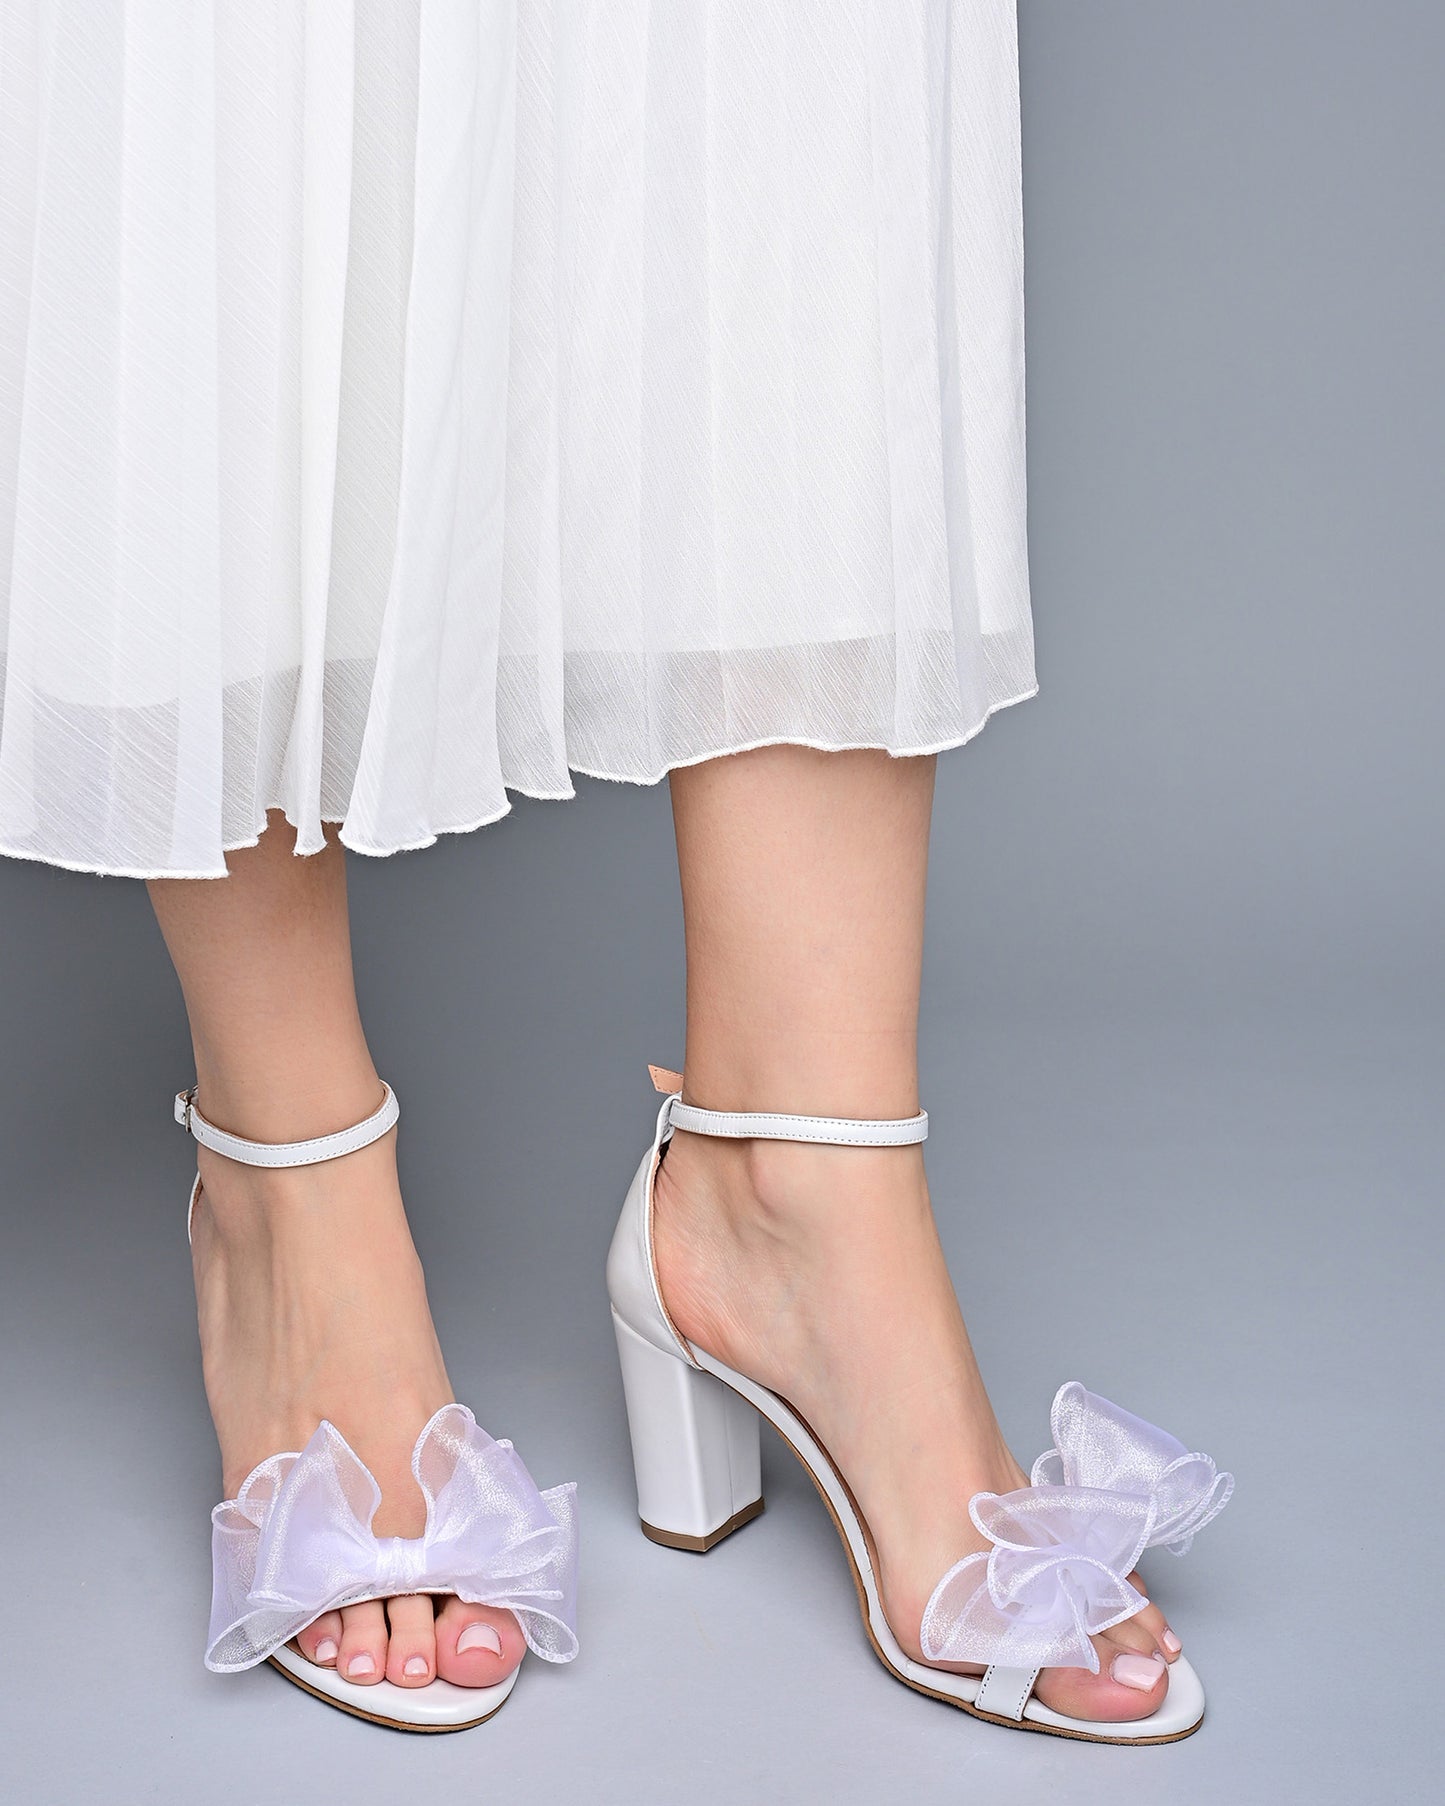 bridal shoes, bow high heels